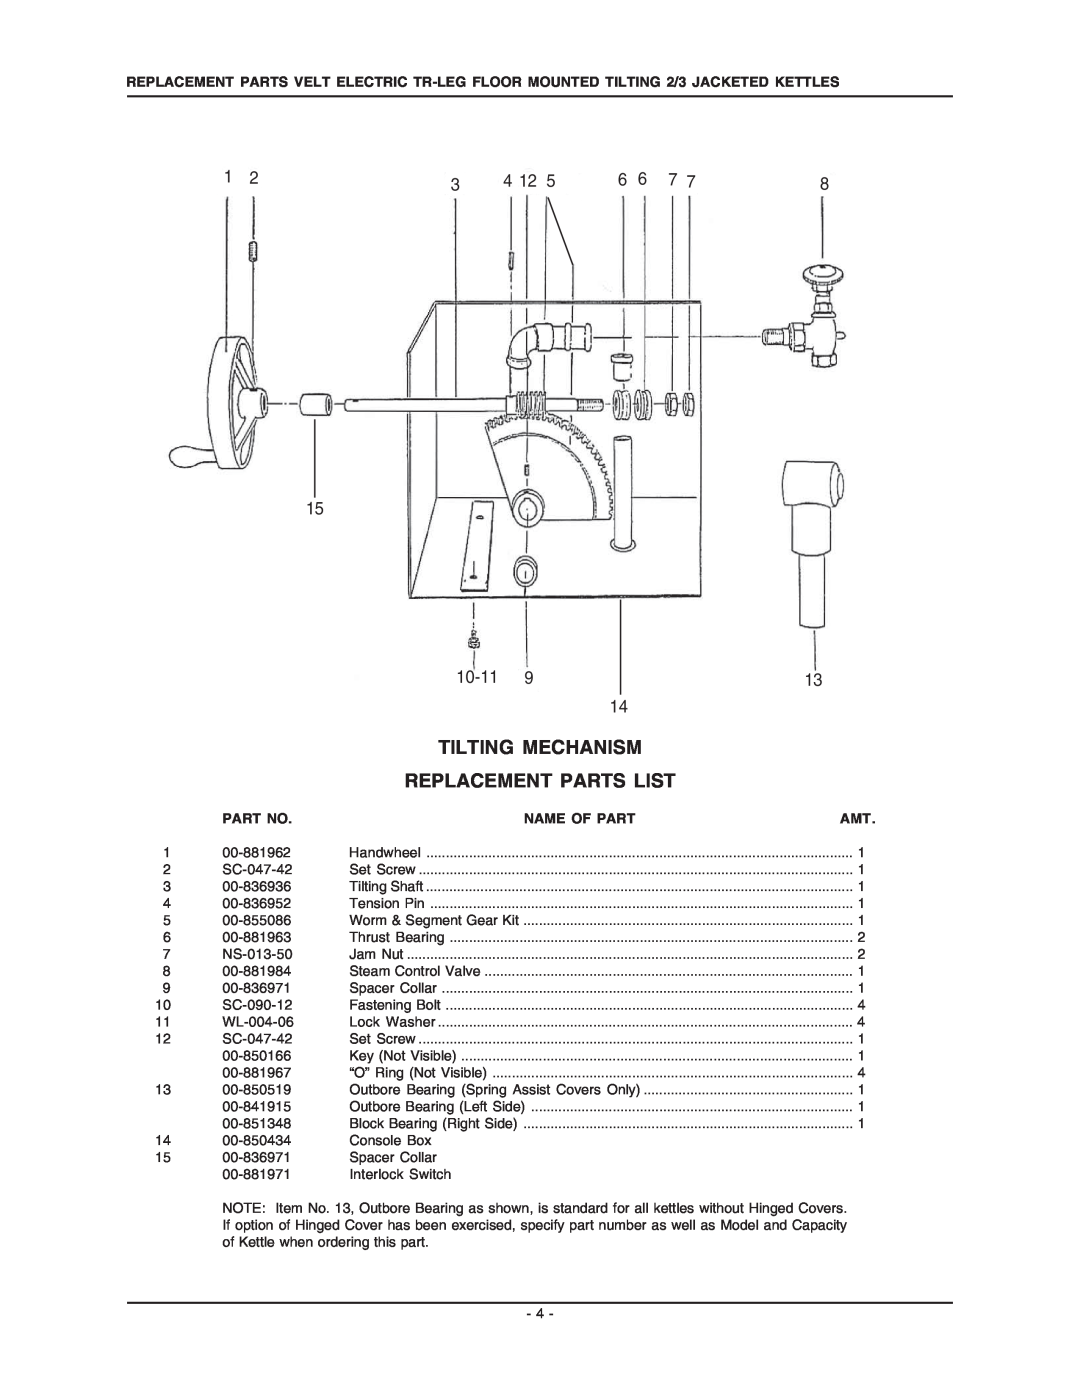 Vulcan-Hart VELT20, VELT60, VELT100, VELT30, VELT40, VELT80 manual Tilting Mechanism, Replacement Parts List, 10-119 